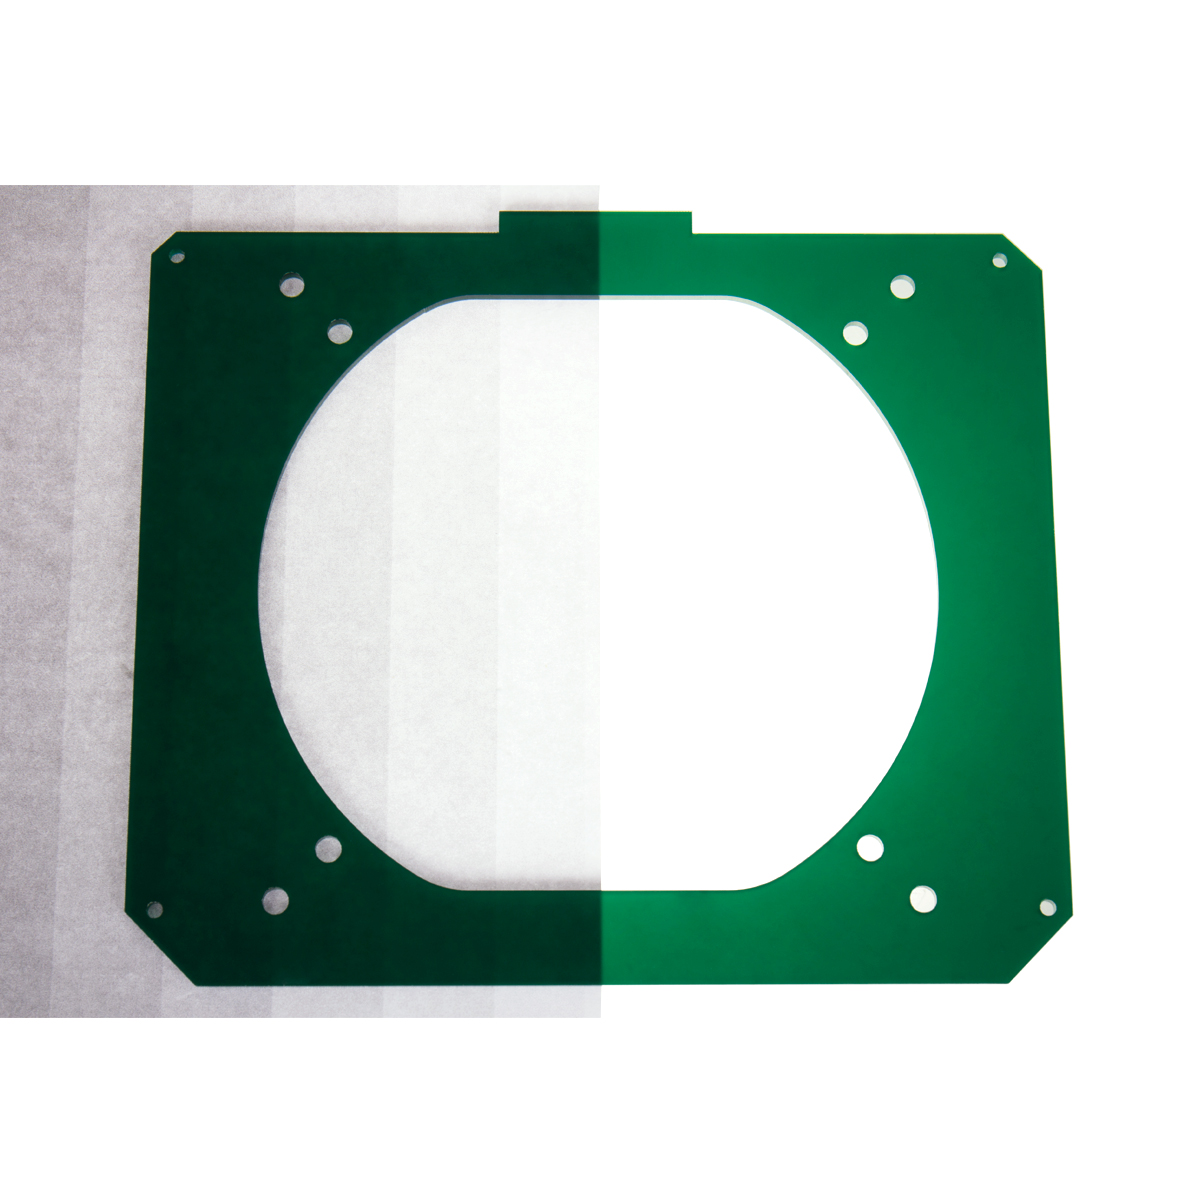 Lazer3D LZ7 Left Panel - Emerald Green Open